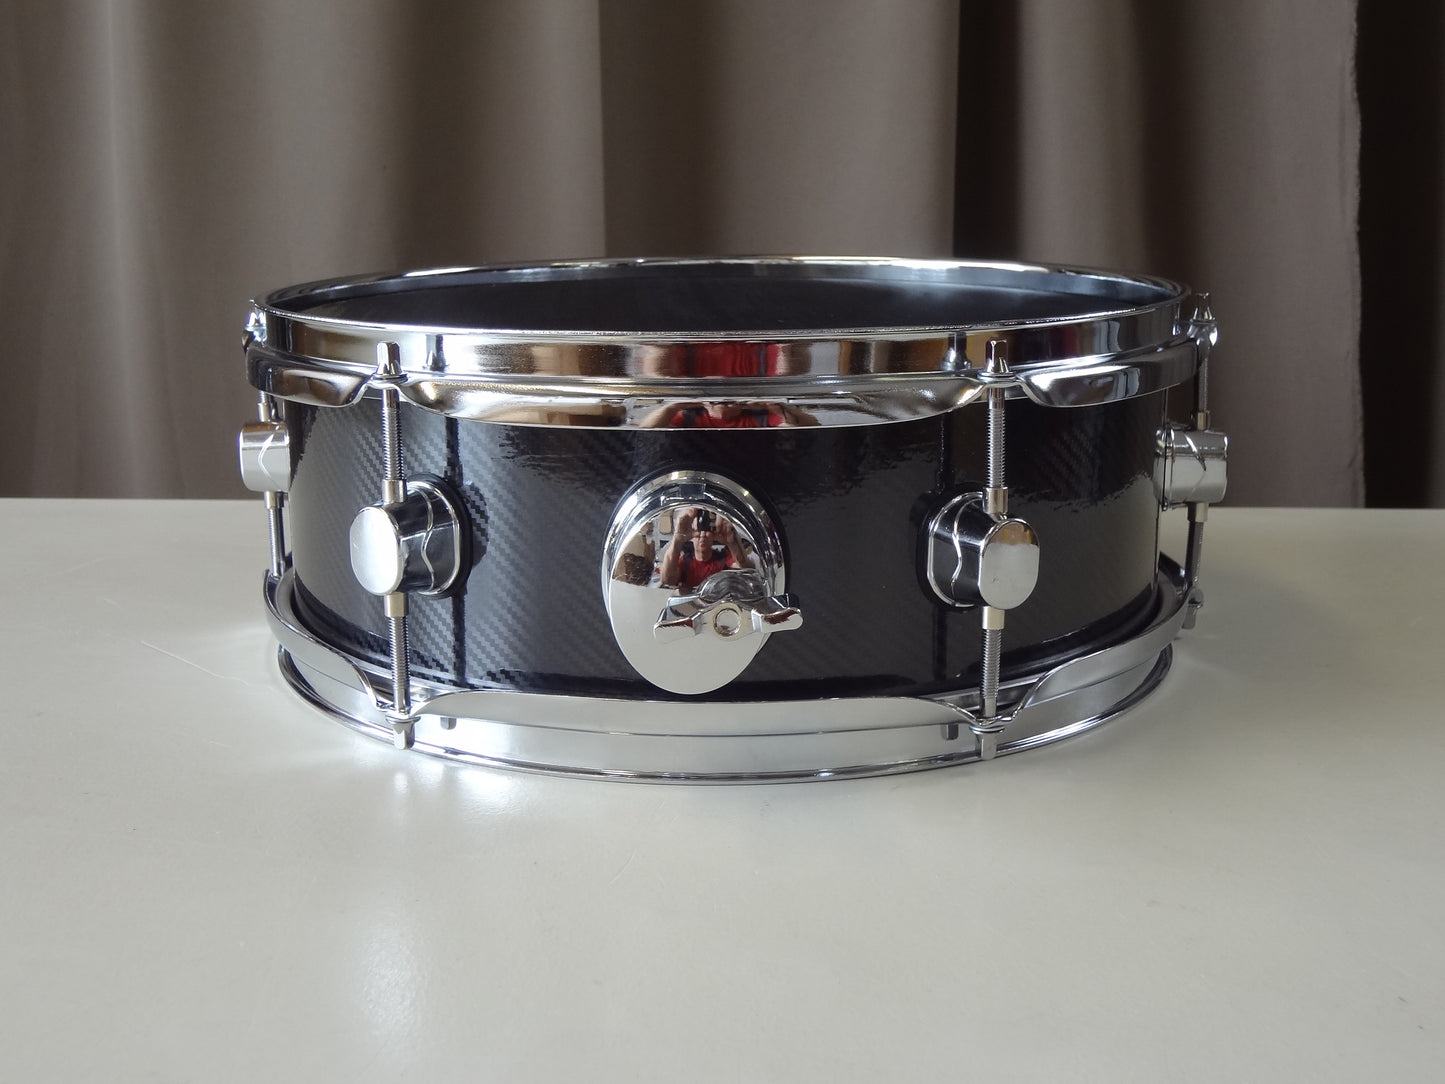 Refurbished 13 Inch Custom Built Electronic Snare Drum - Black Pattern